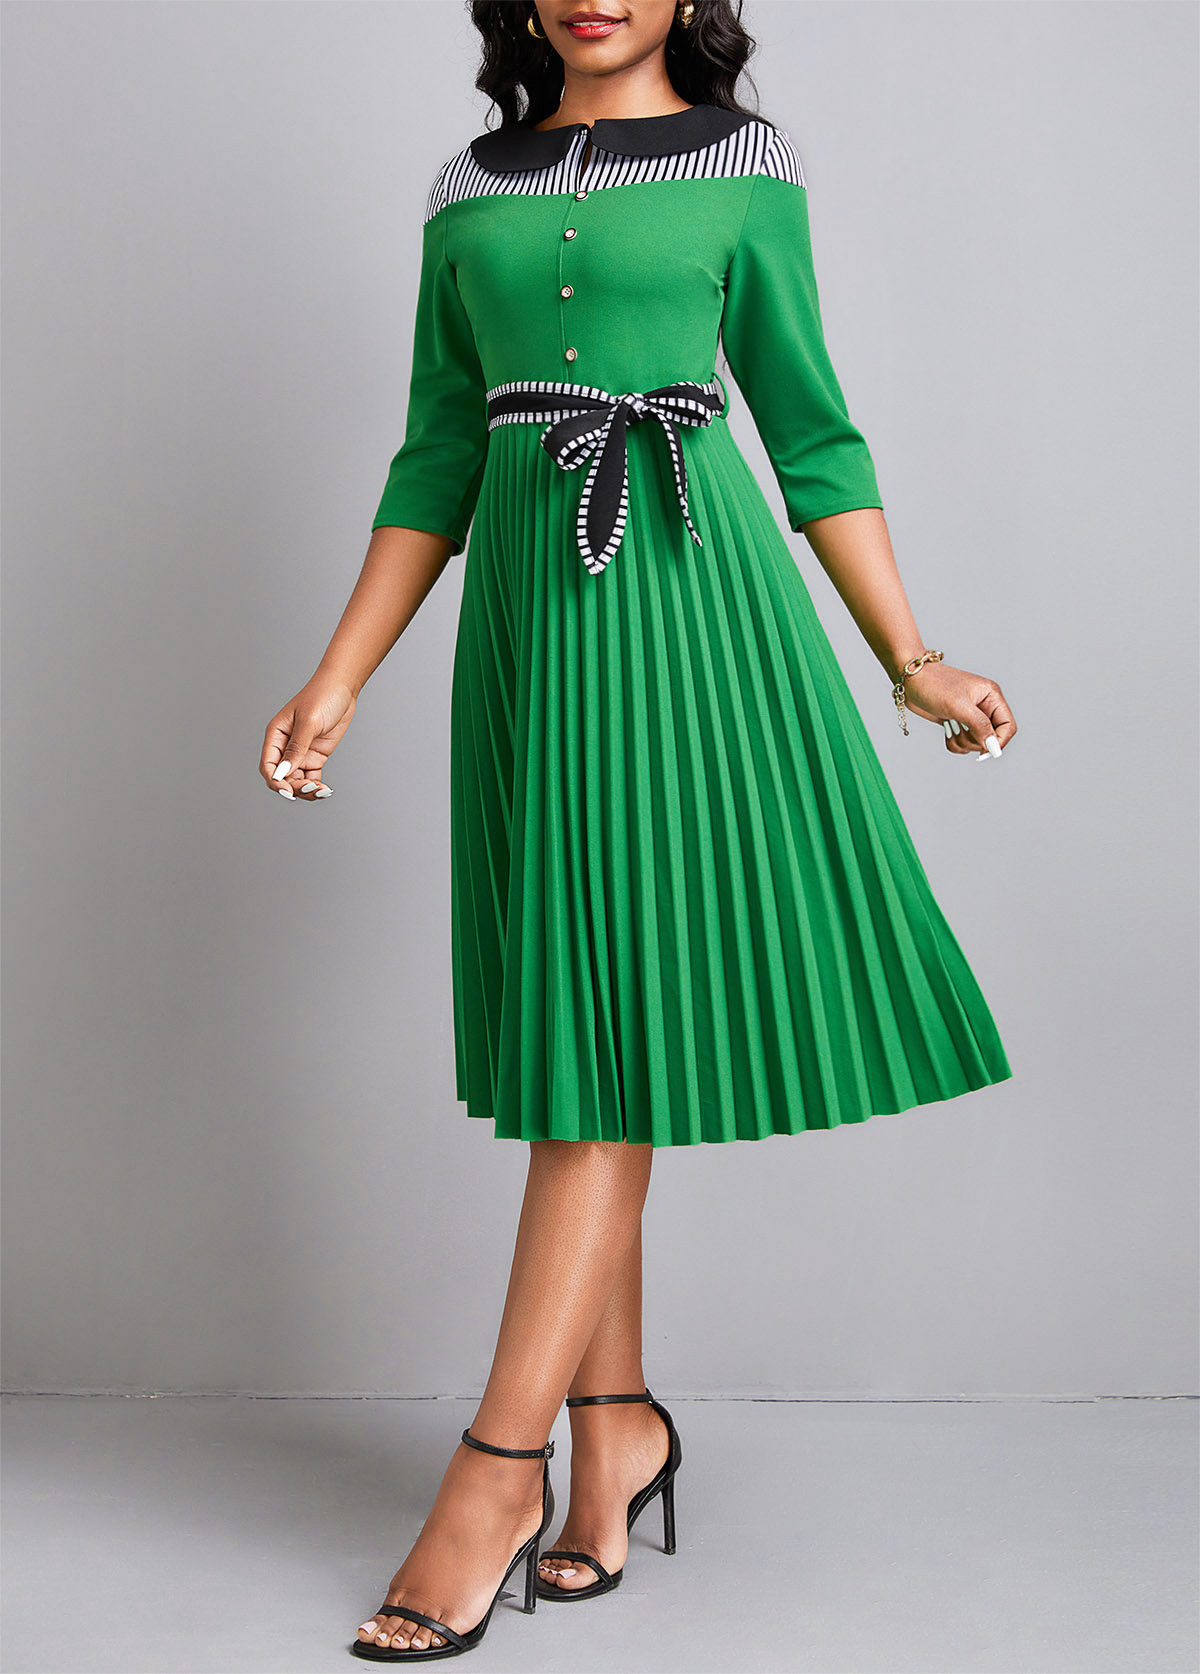 ROTITA Pleated Striped Green Belted Peter Pan Collar Dress | Rotita.com ...